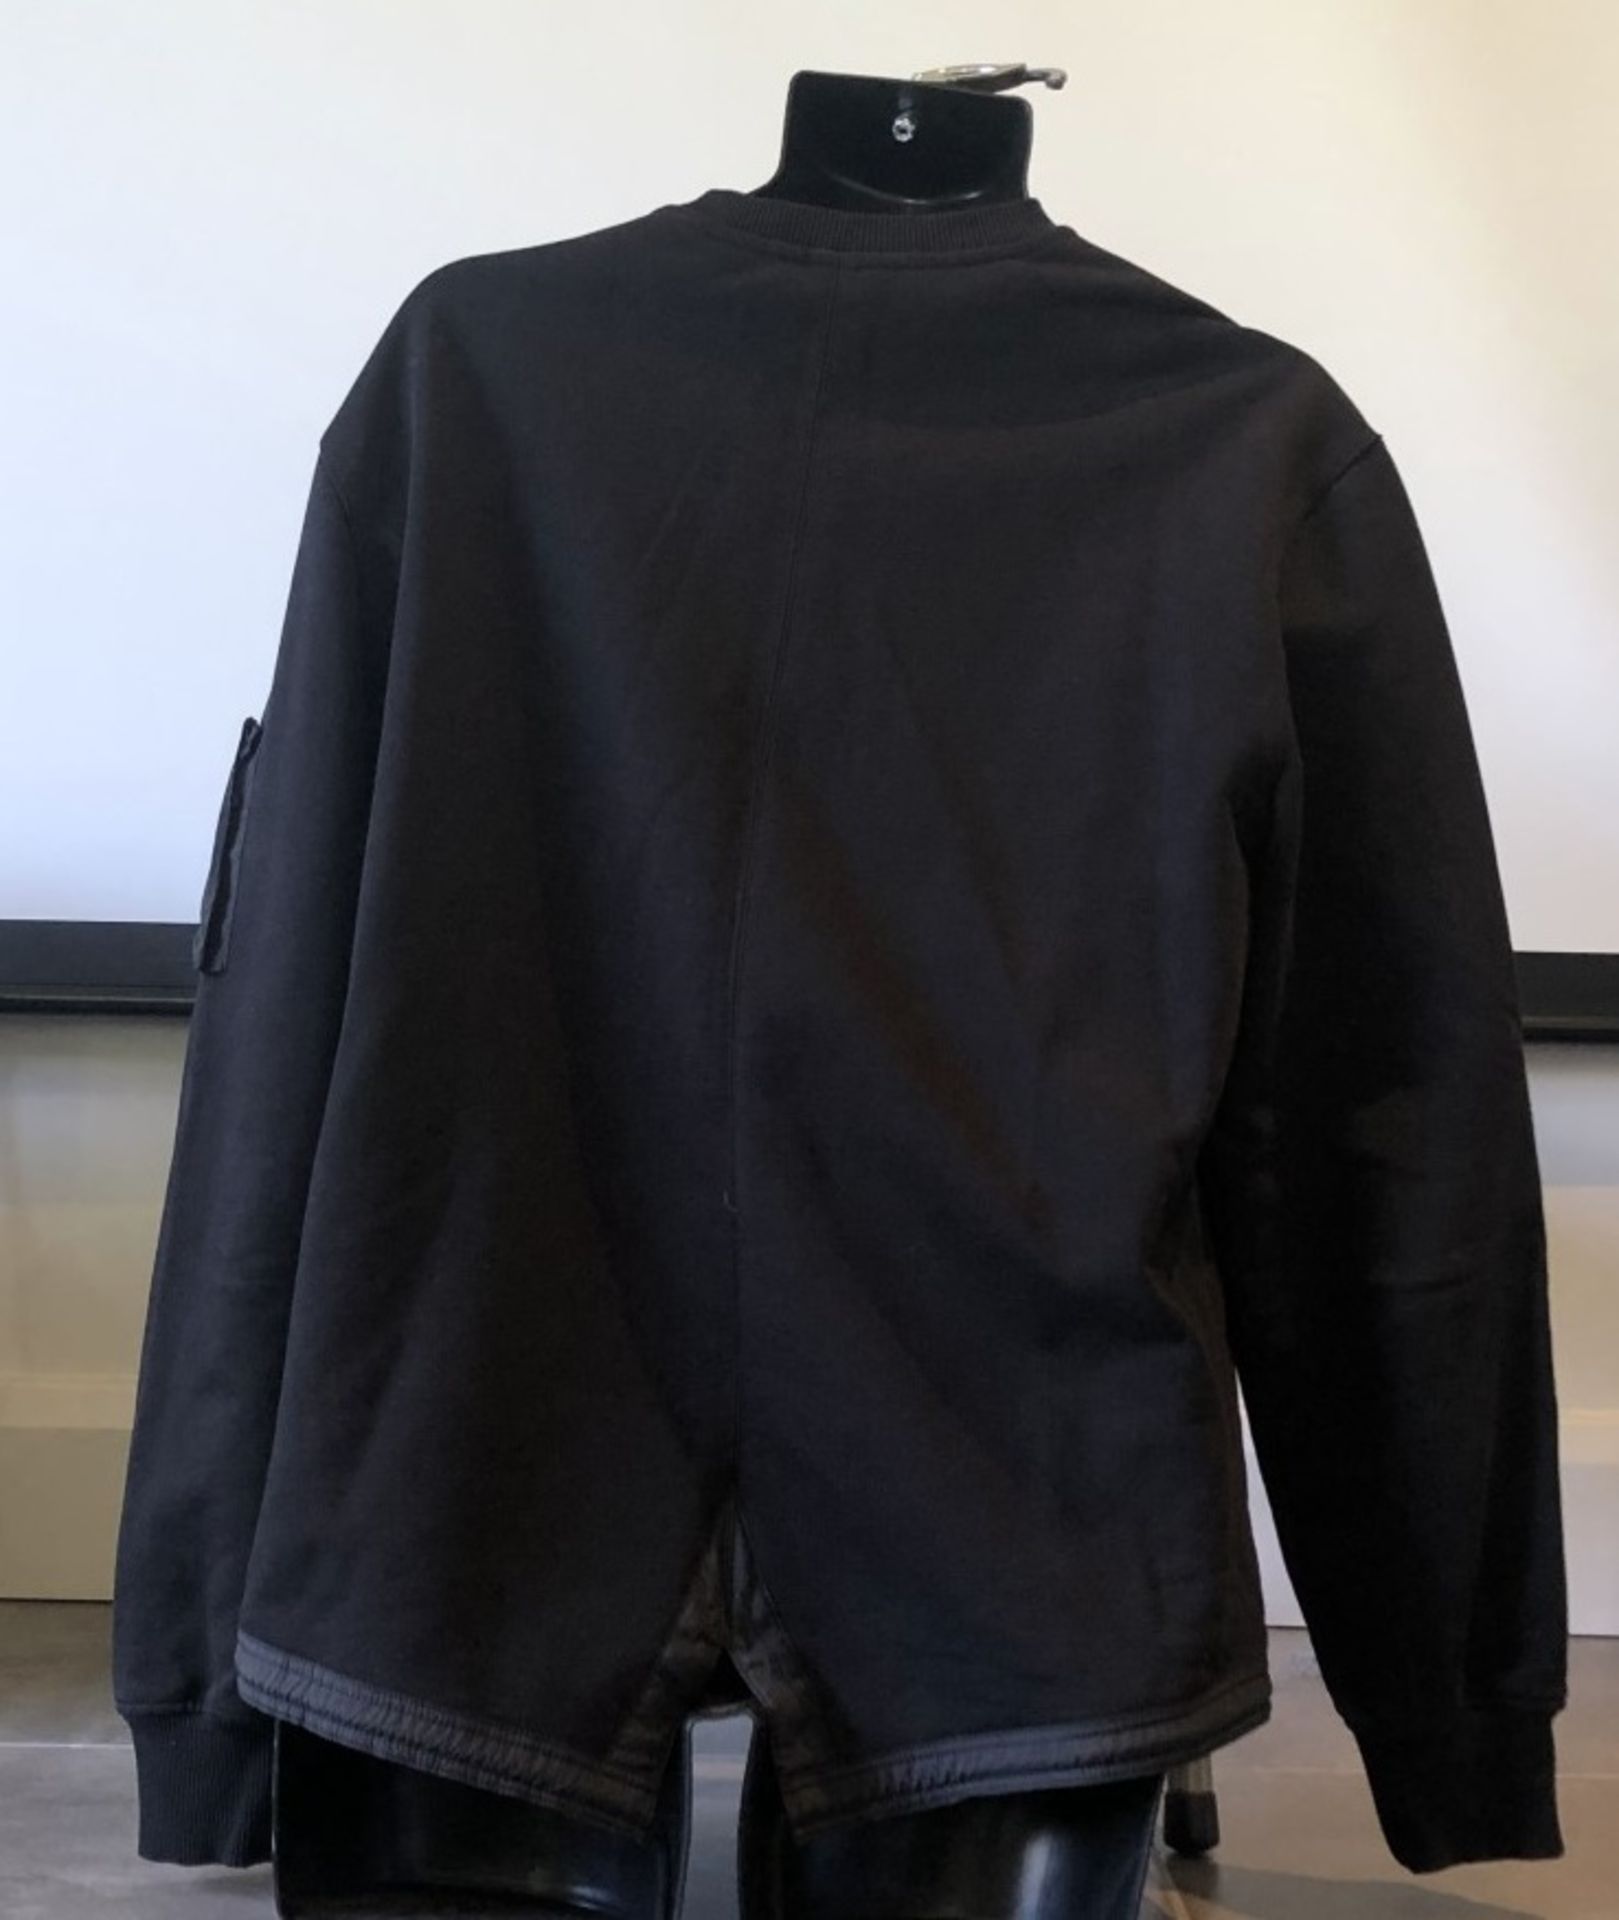 1 x Men's Genuine Helmut Lang Sweatshirt - Black - Size (EU/UK): M/M - Original RRP £180.00 - Image 6 of 7